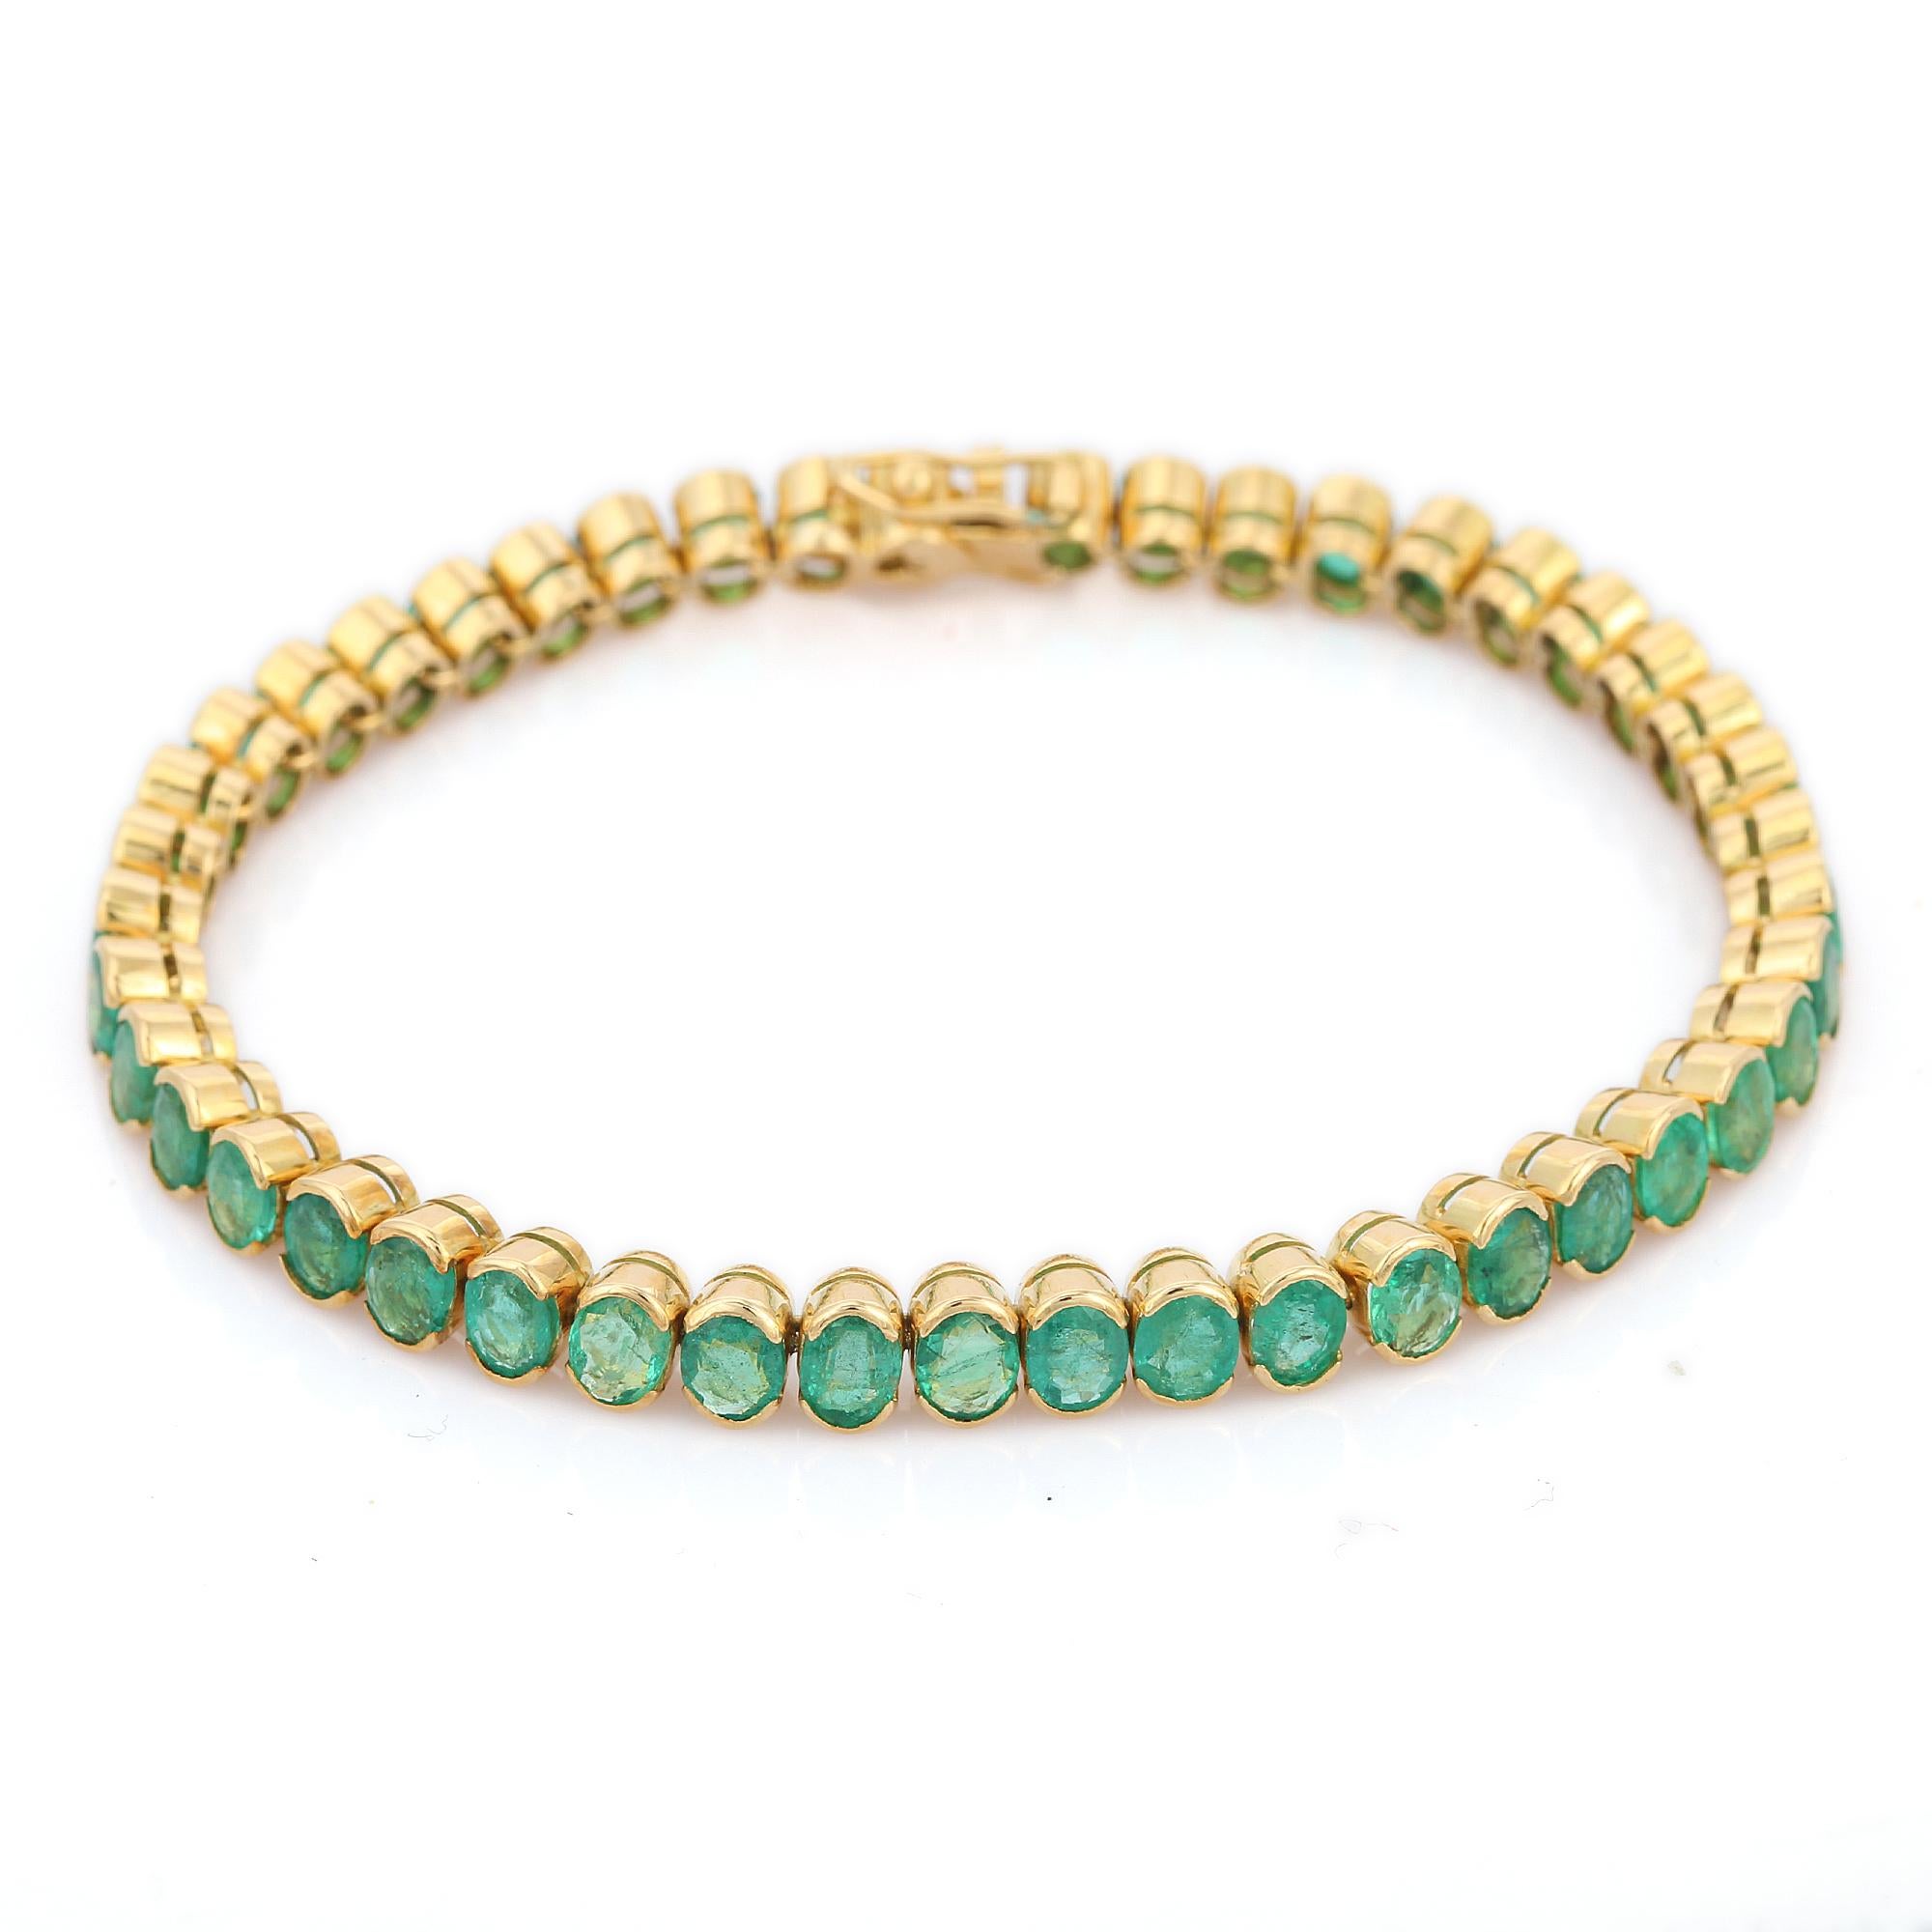 Certified 14.15 Carat Emerald Gemstone Tennis Bracelet in 18K Yellow Gold For Sale 2